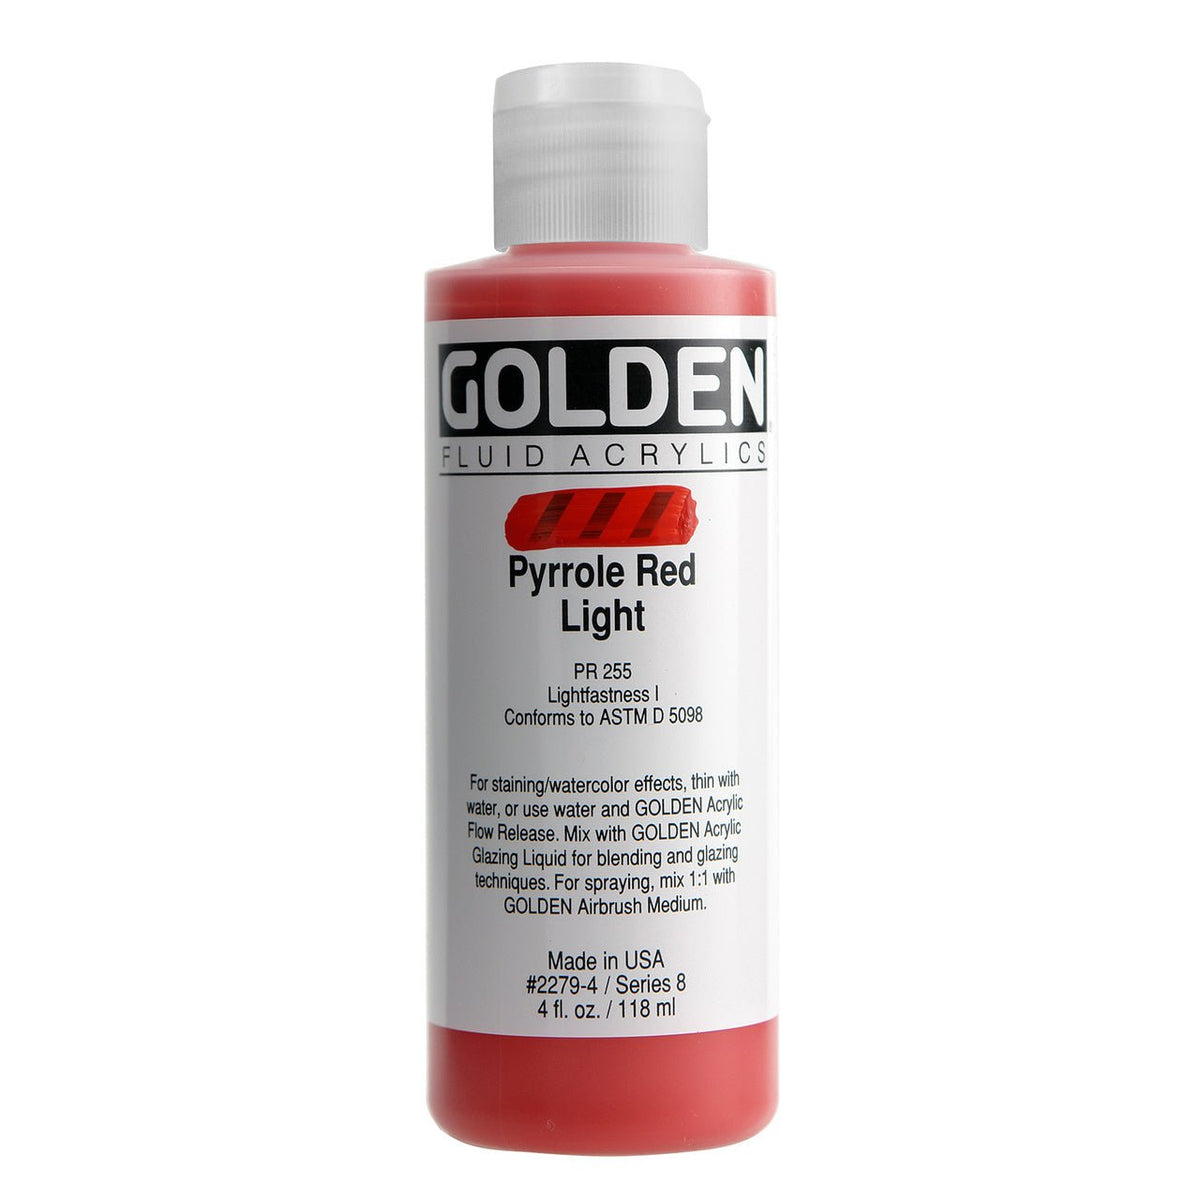 Golden Fluid Acrylic Pyrrole Red Light 4 oz - merriartist.com